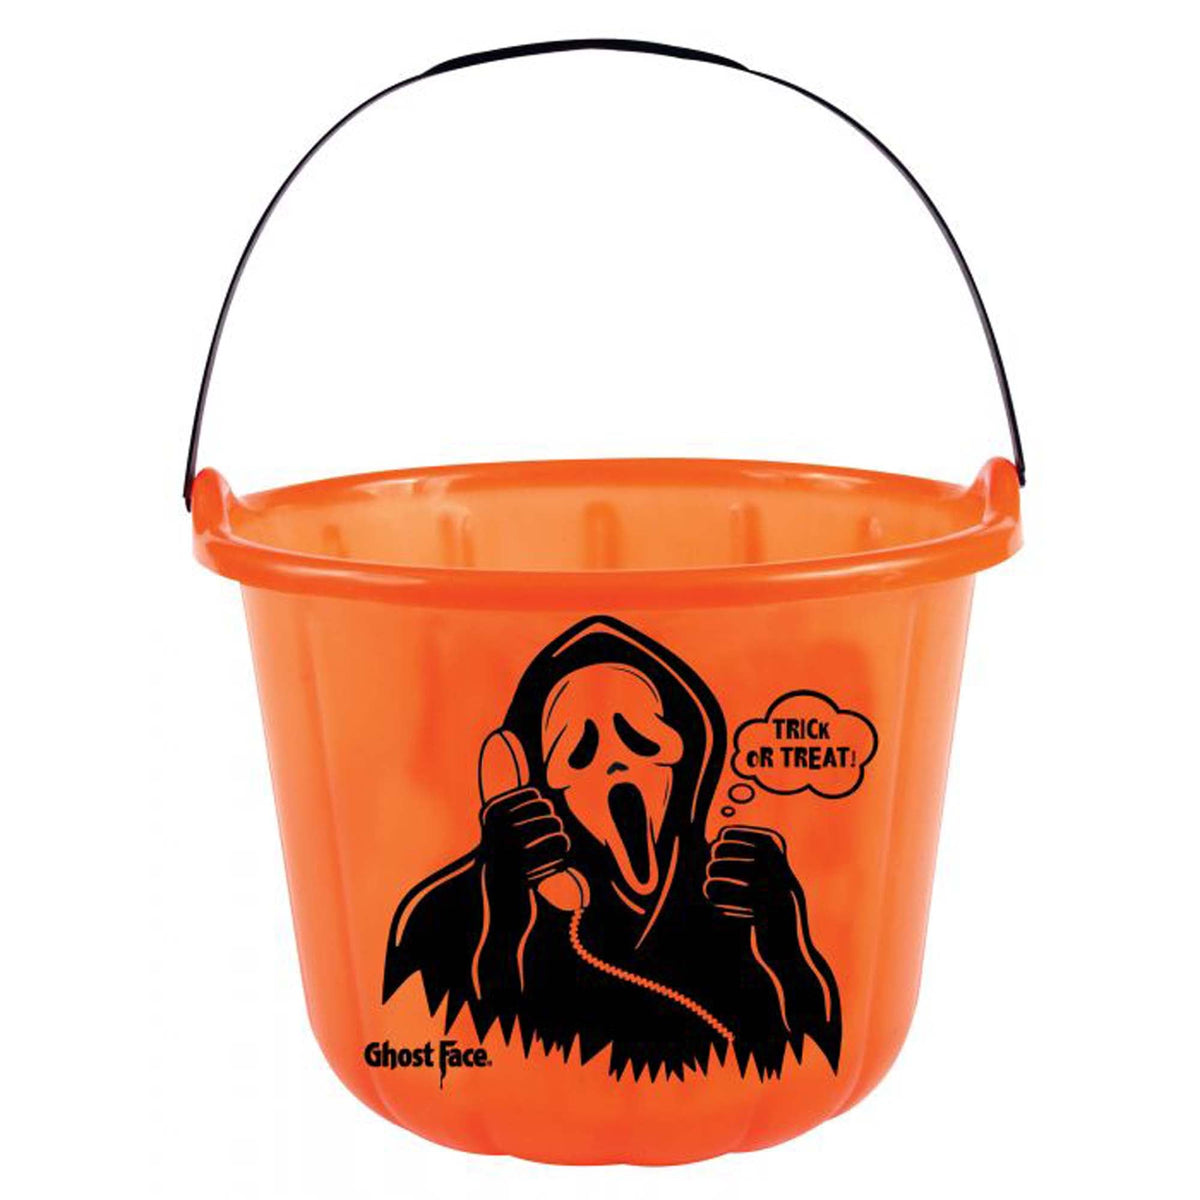 FUN WORLD Halloween Ghost Face Treat Bucket, 1 Count 071765112468